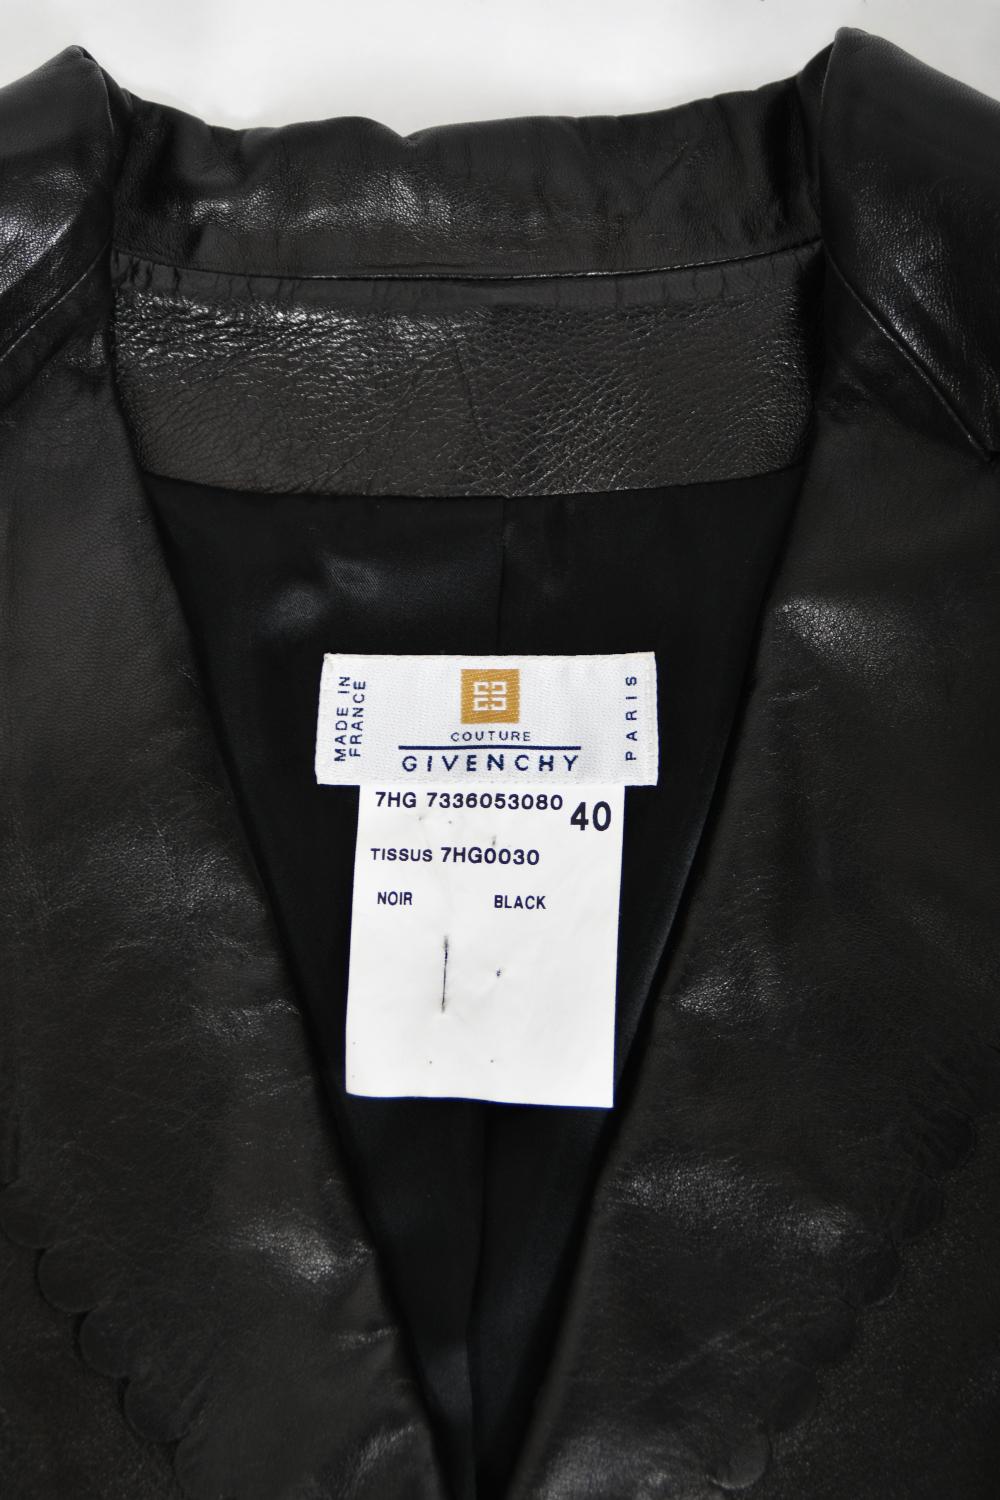 1997 Alexander Mcqueen for Givenchy Runway Black Leather Cutwork Blazer Jacket 12